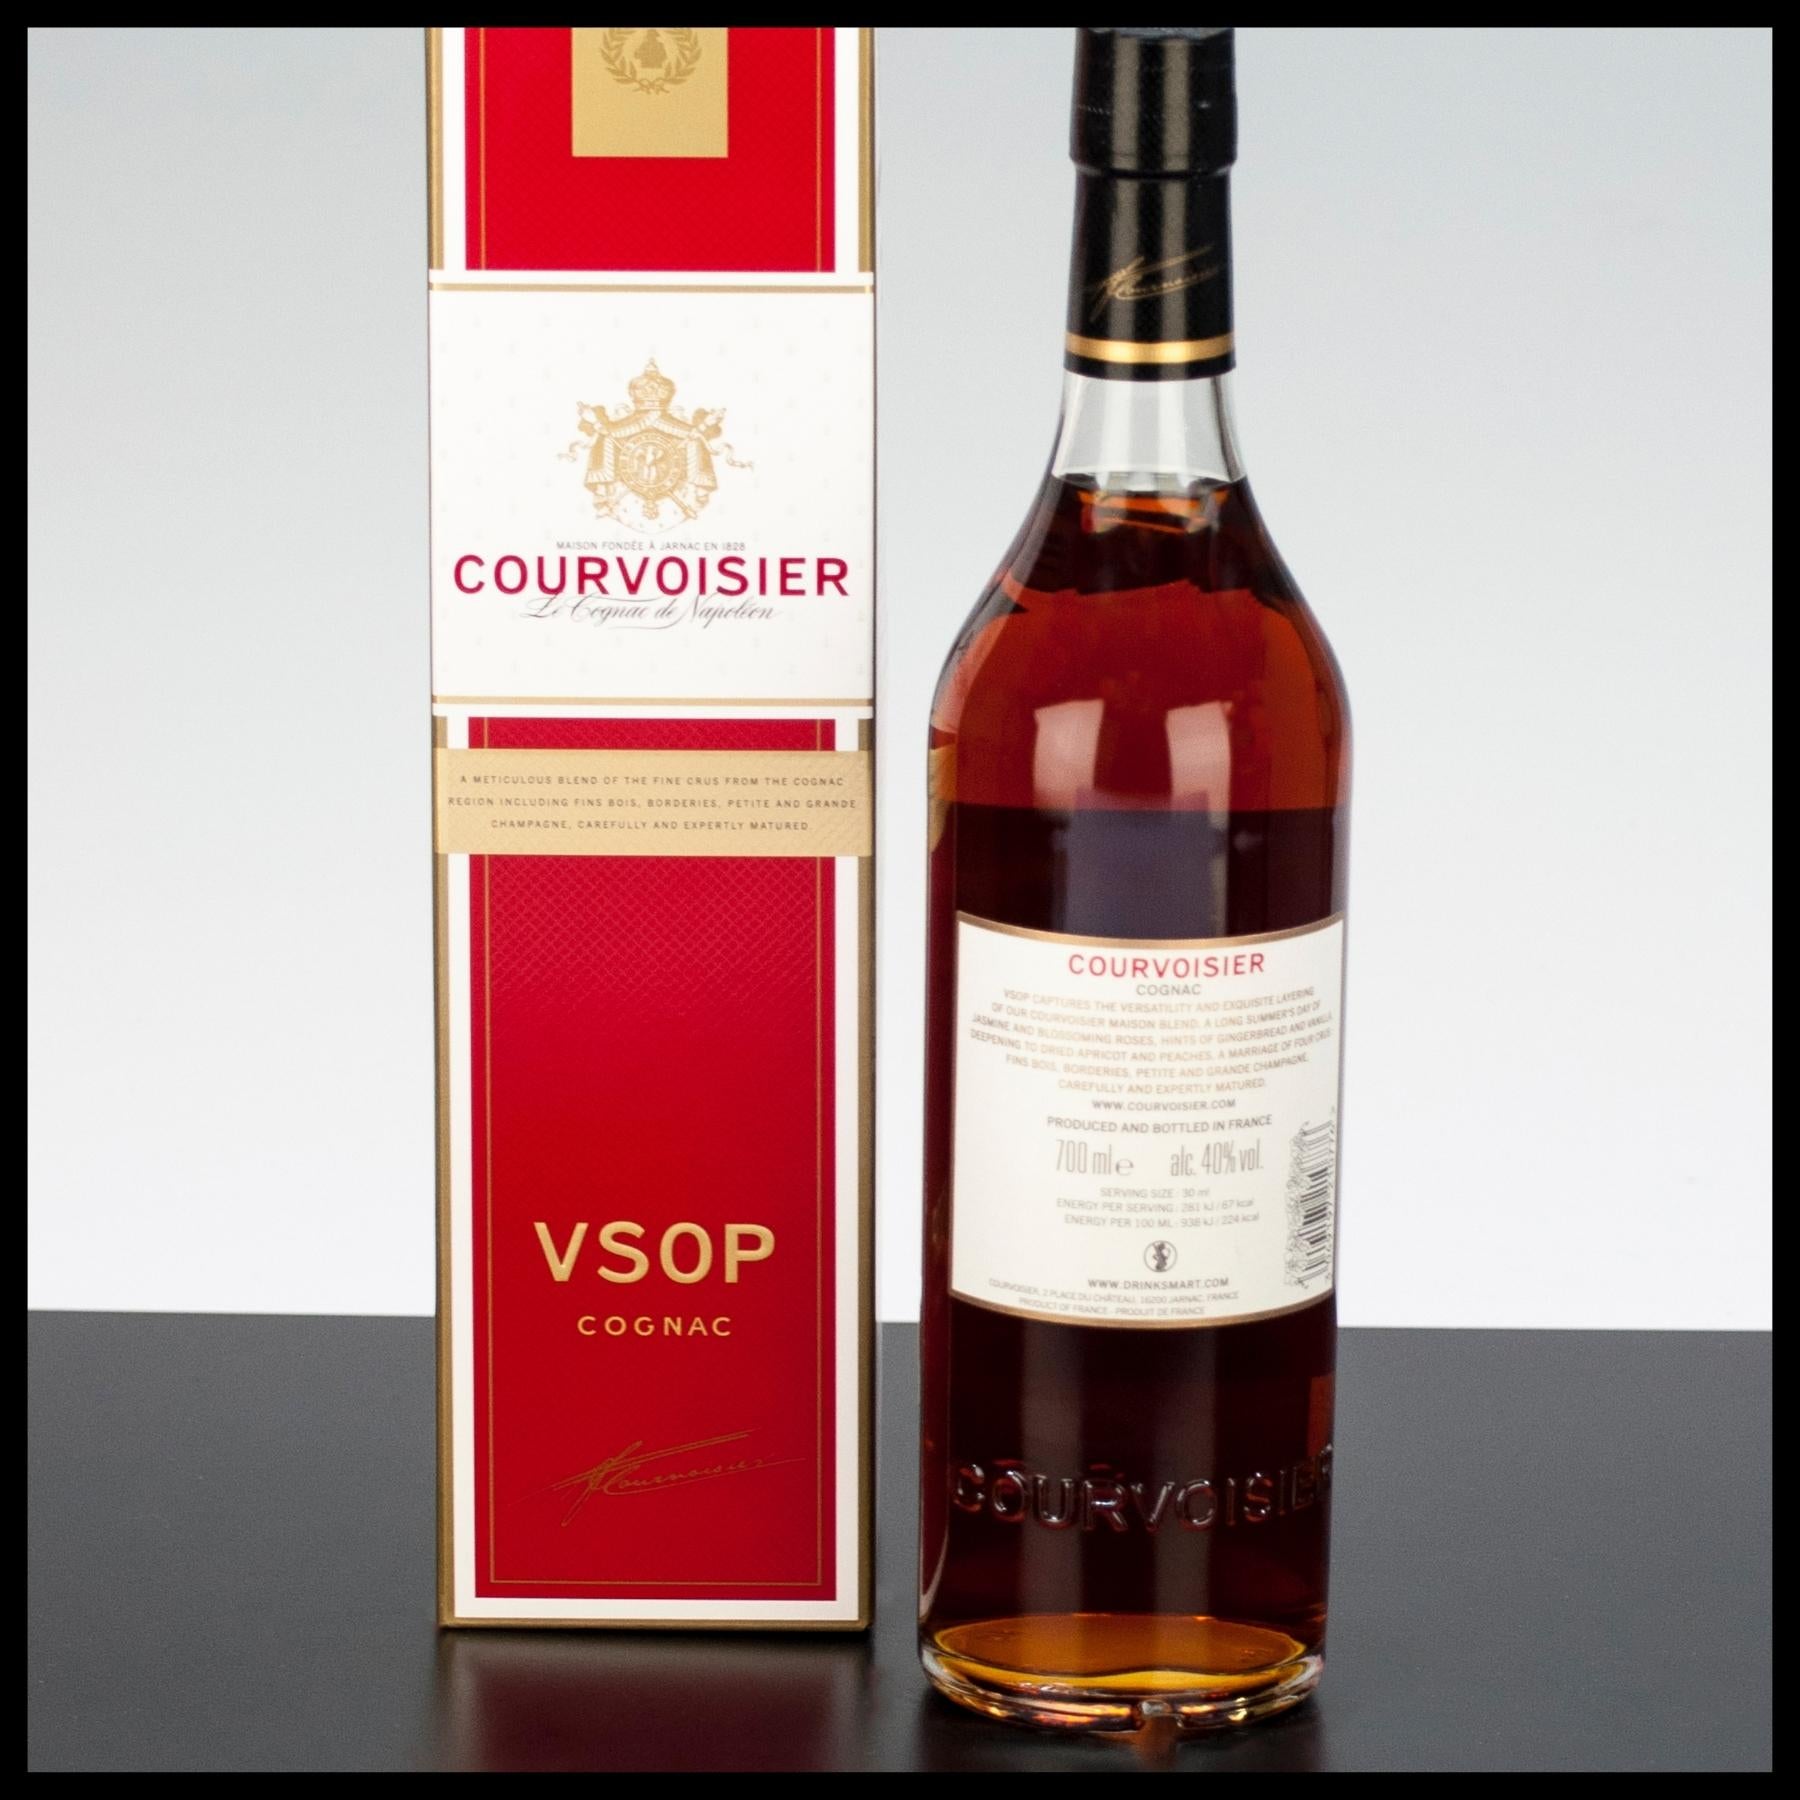 Courvoisier VSOP 0,7L - | Cognac 40% Vol. Premium